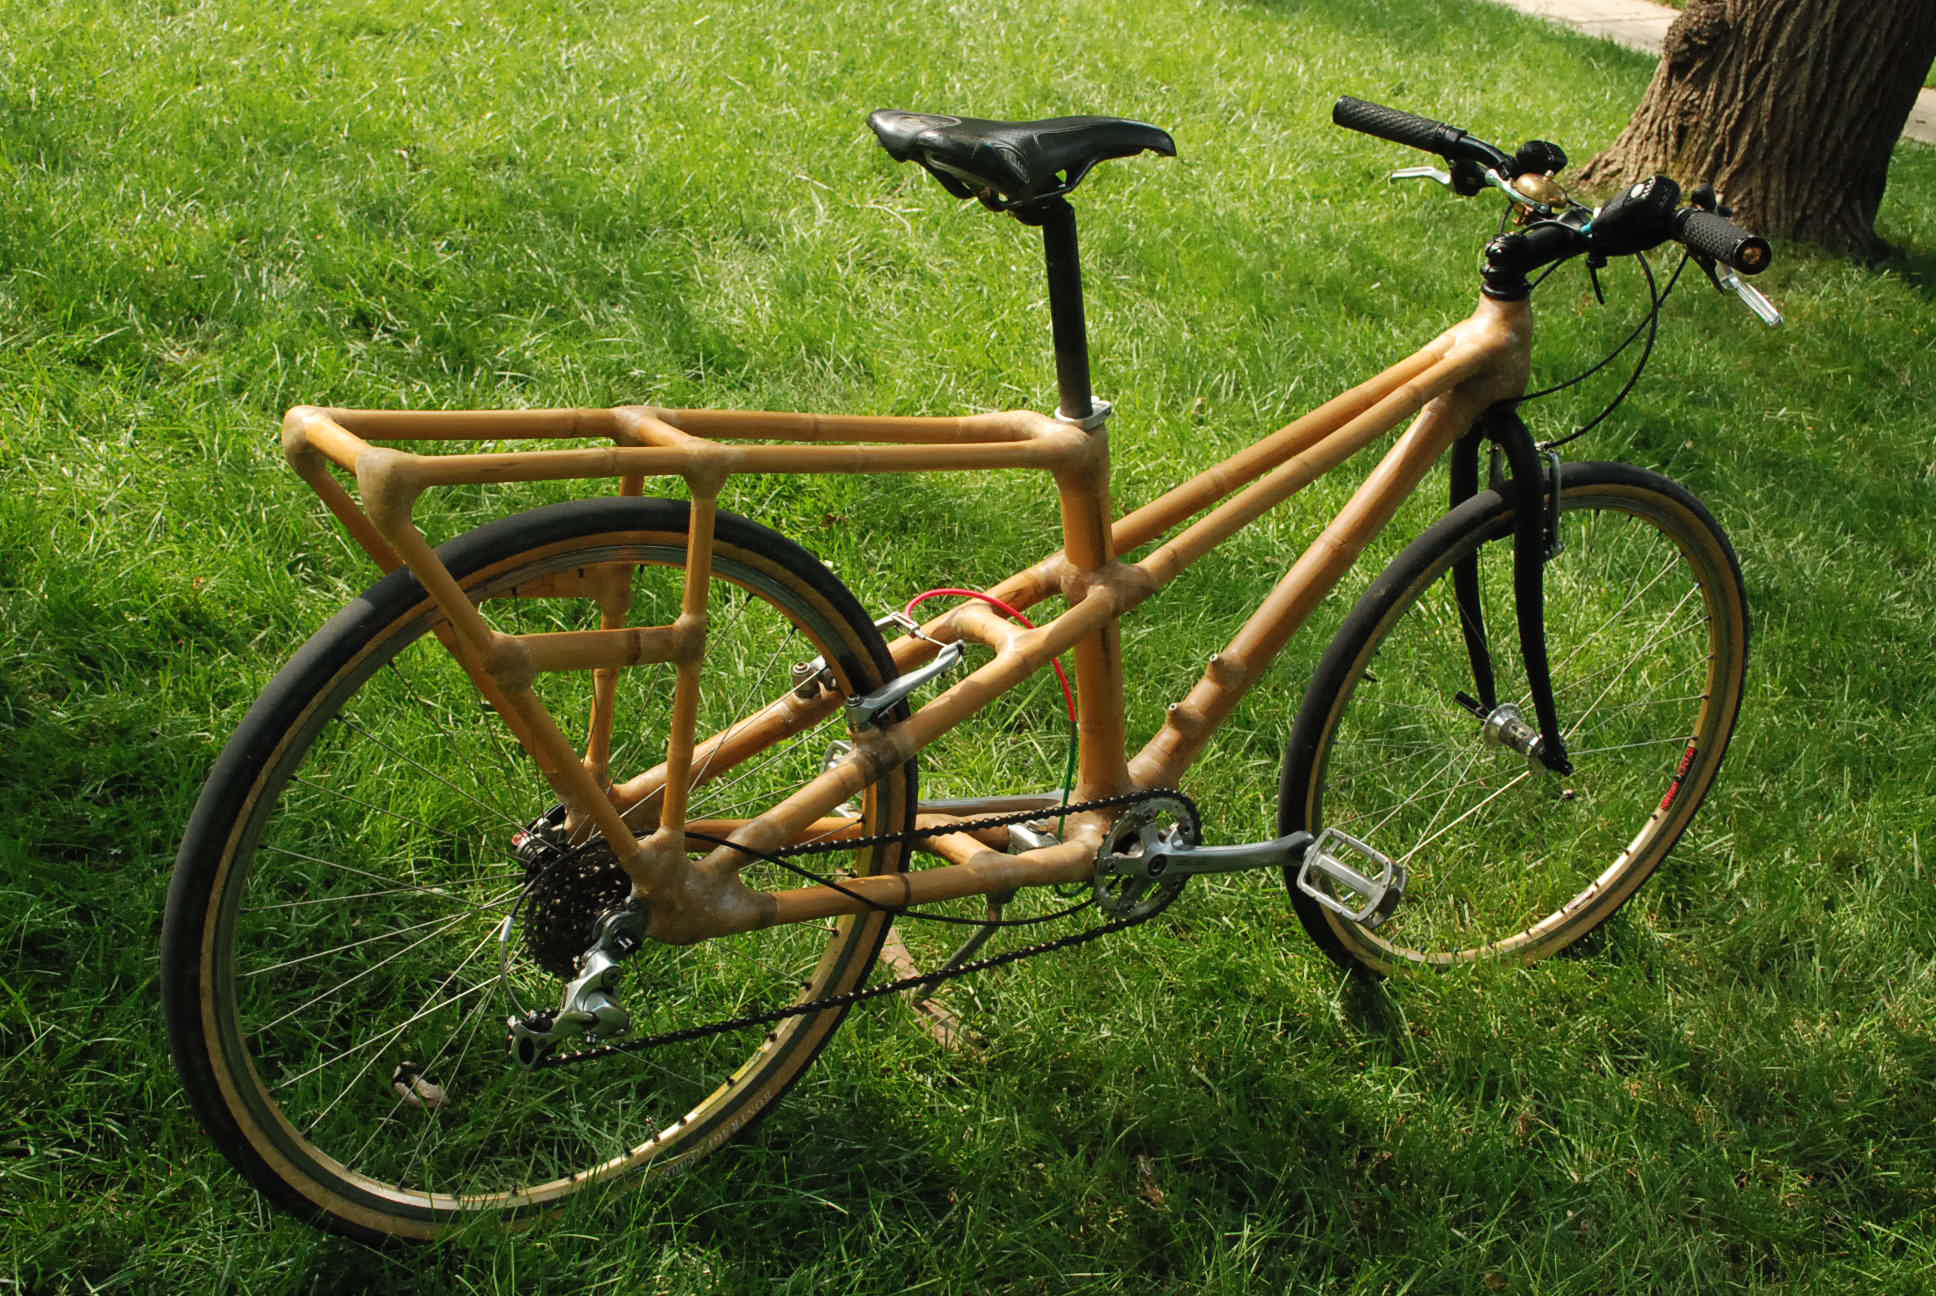 bamboo bike rear view photo